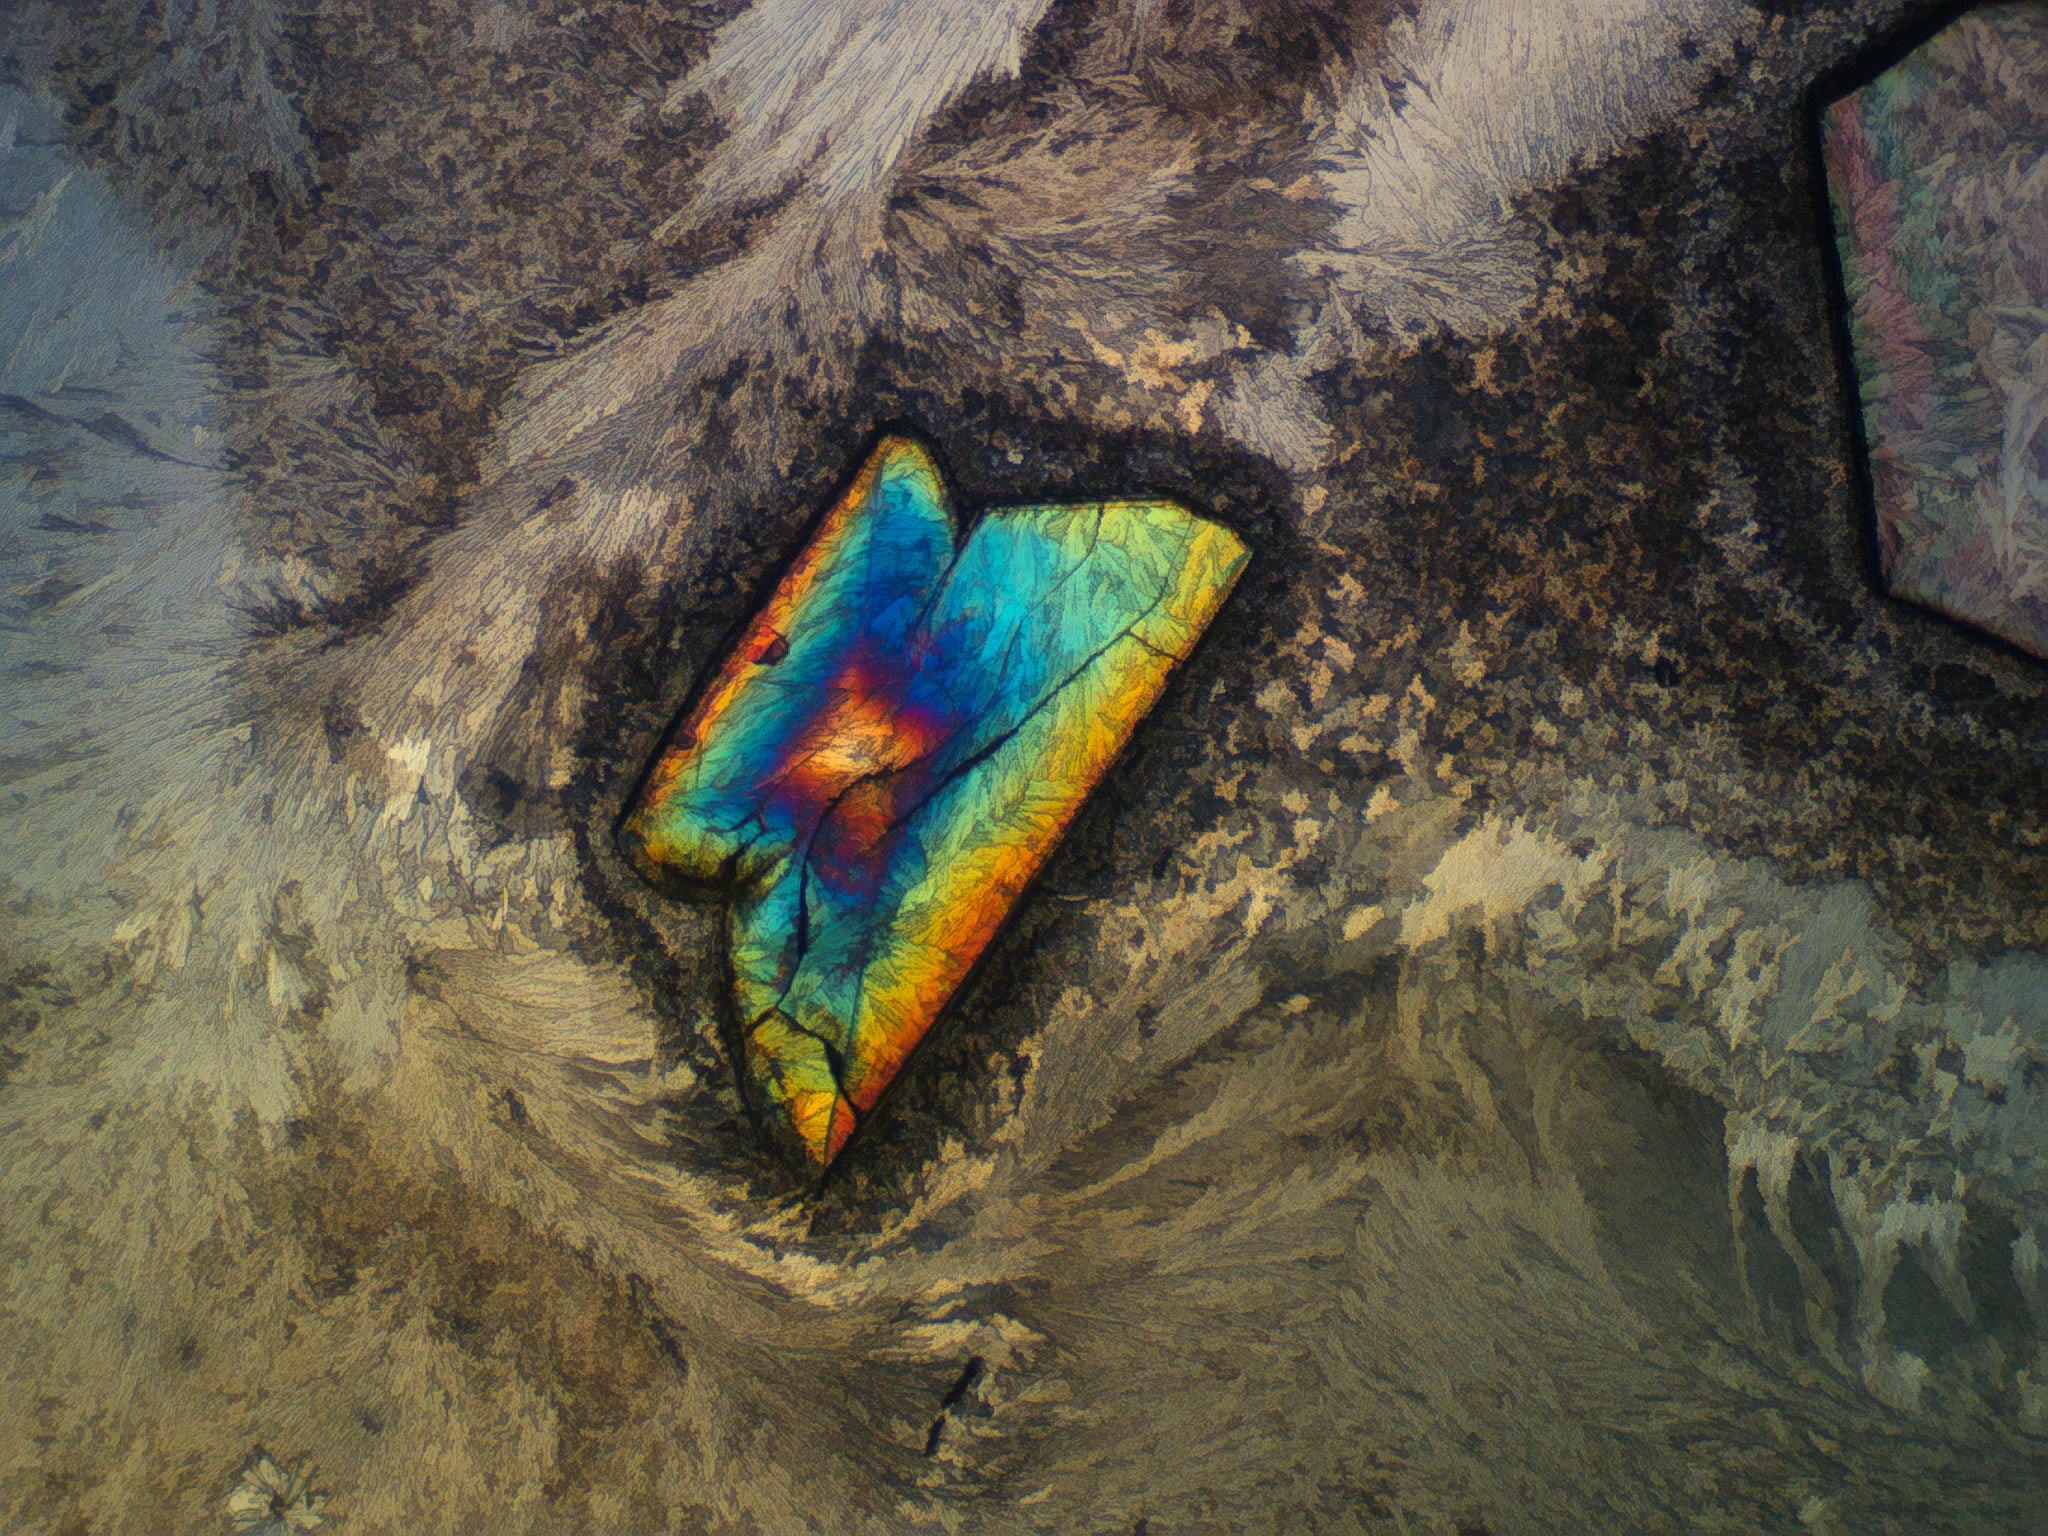 Microscopic crystals of borax at 4X.